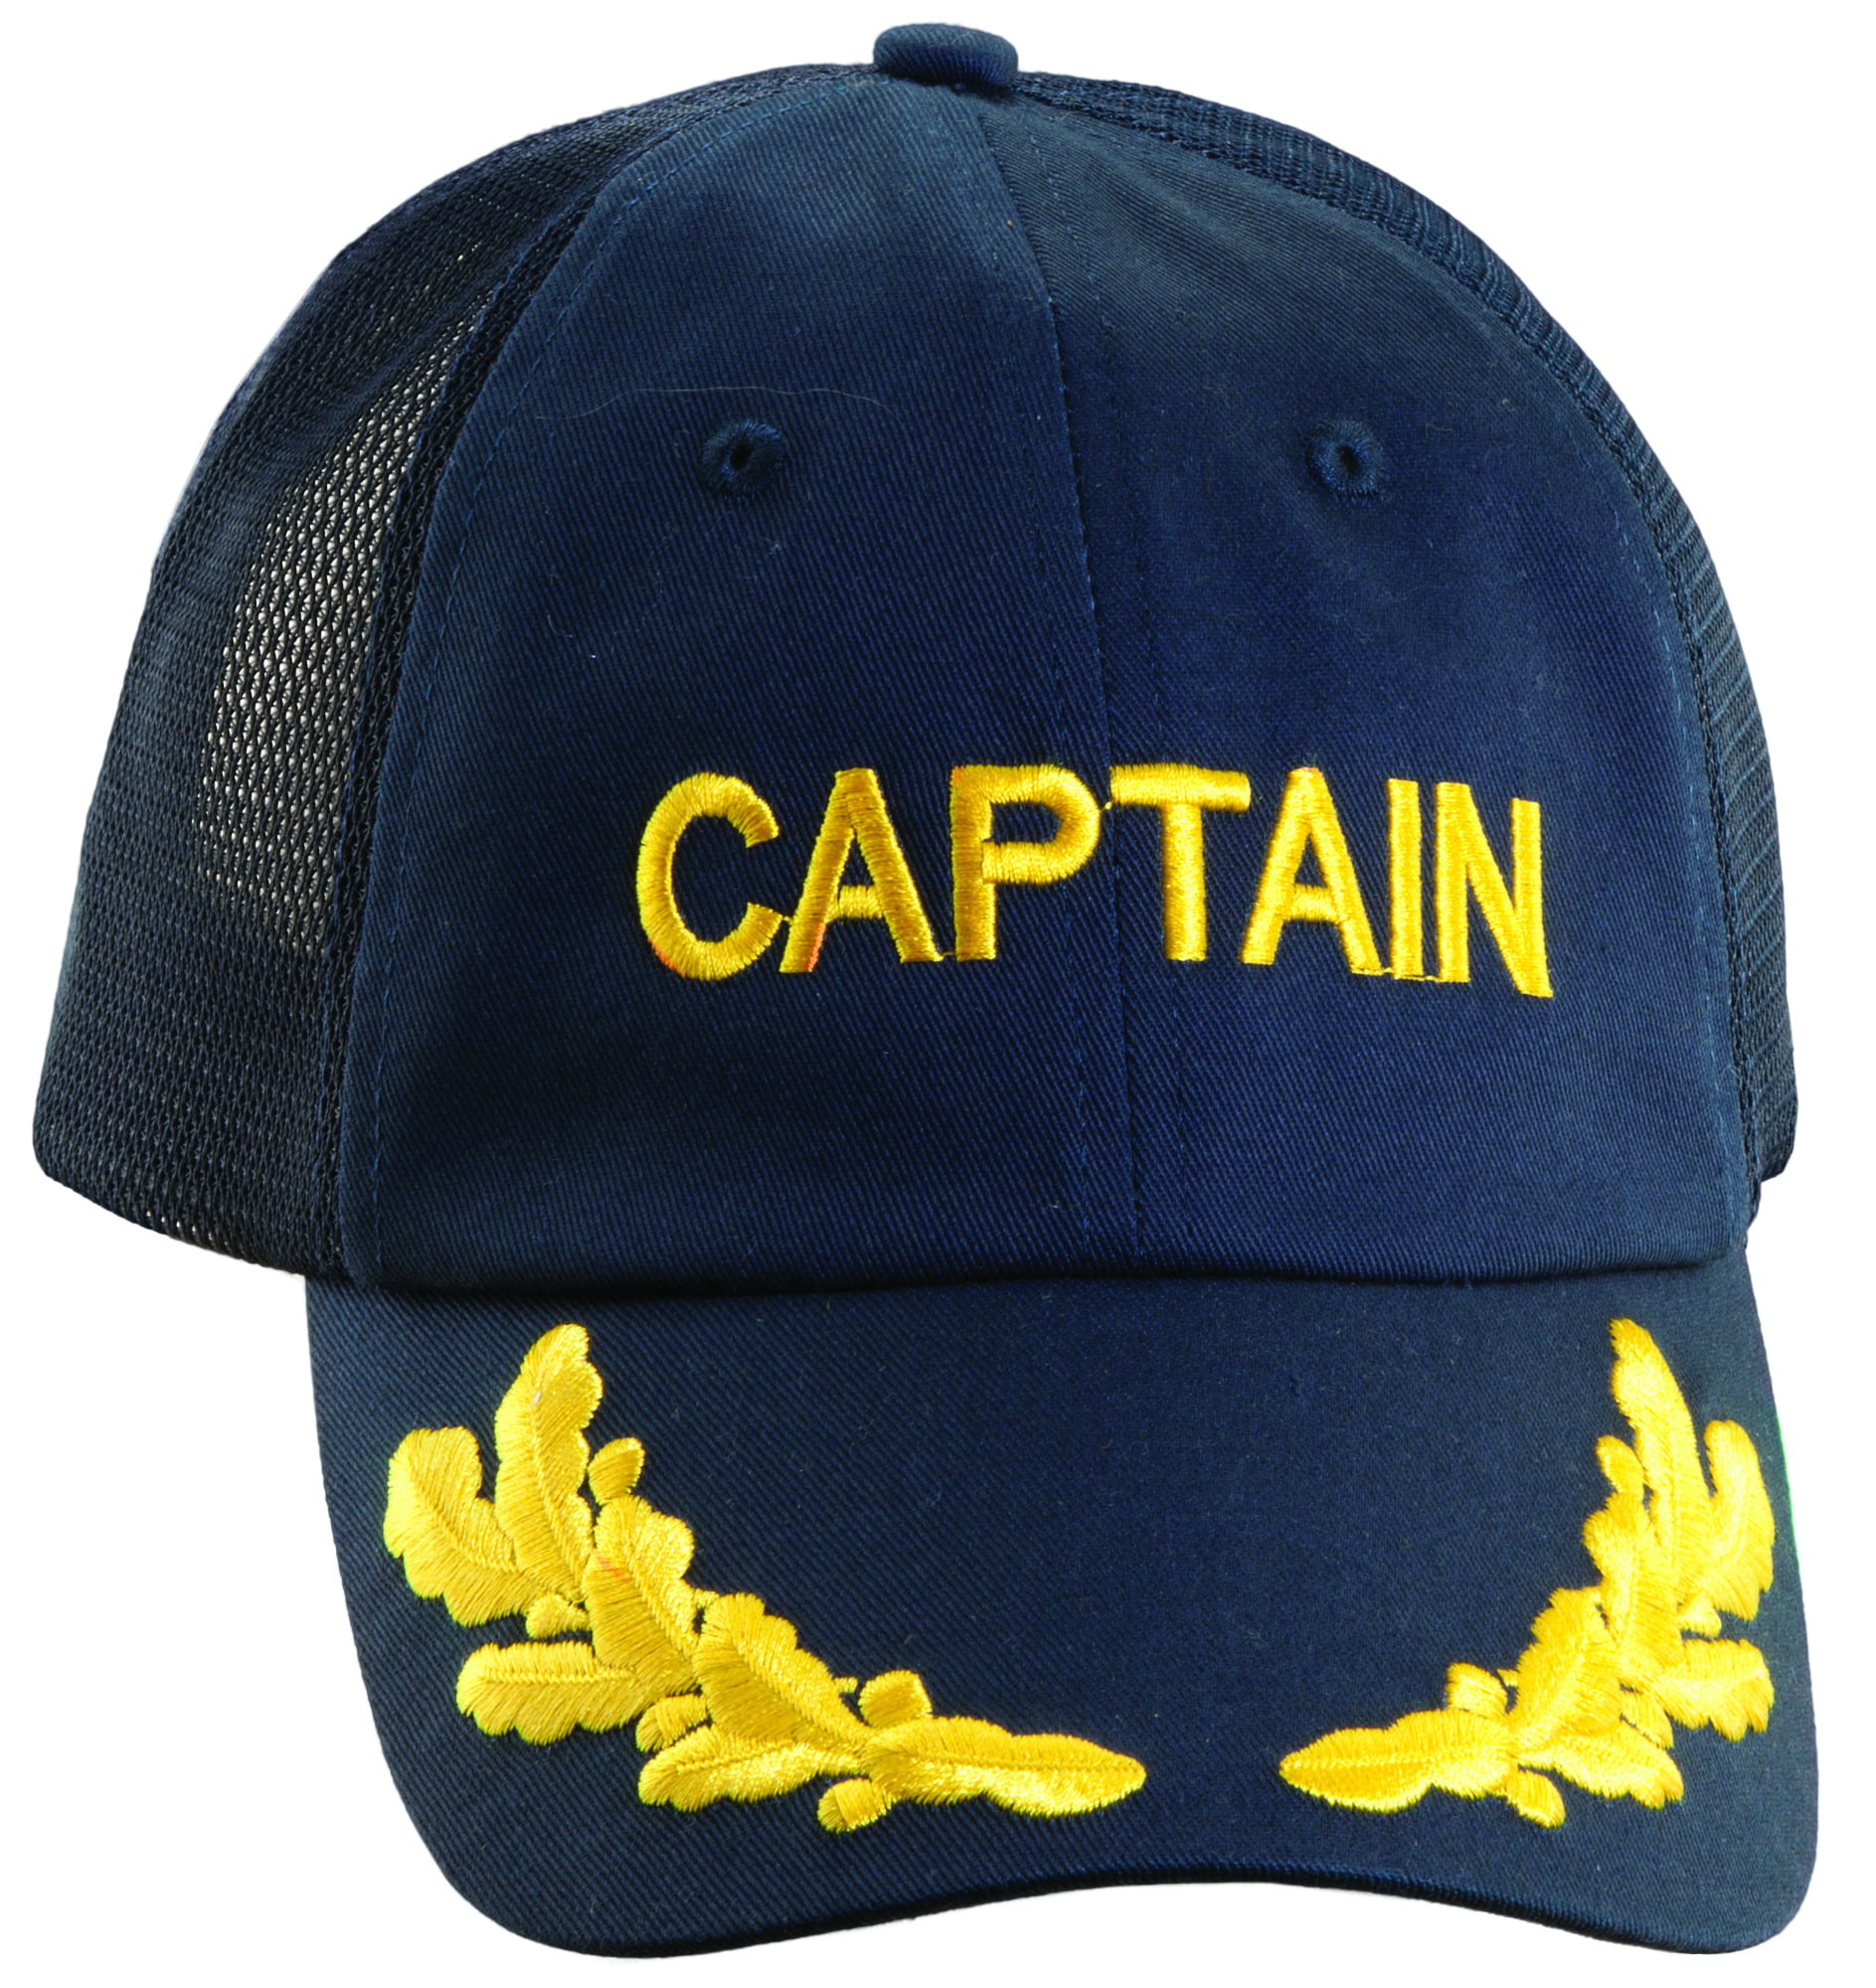 4sold Adult Baseball Cap Yachting Captain Adjustable Strap Boys Men Summer Hat Cotton Navy